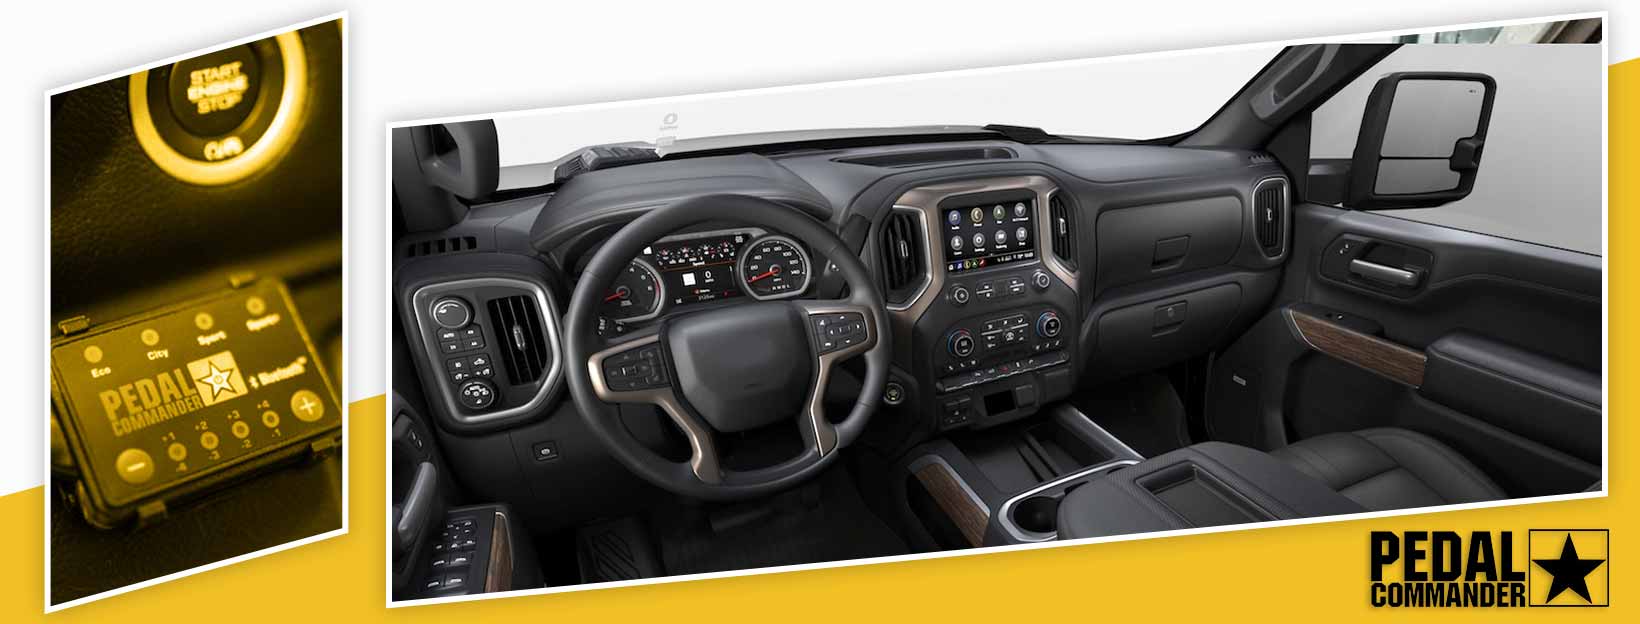 Pedal Commander for Chevrolet Silverado 3500 - interior